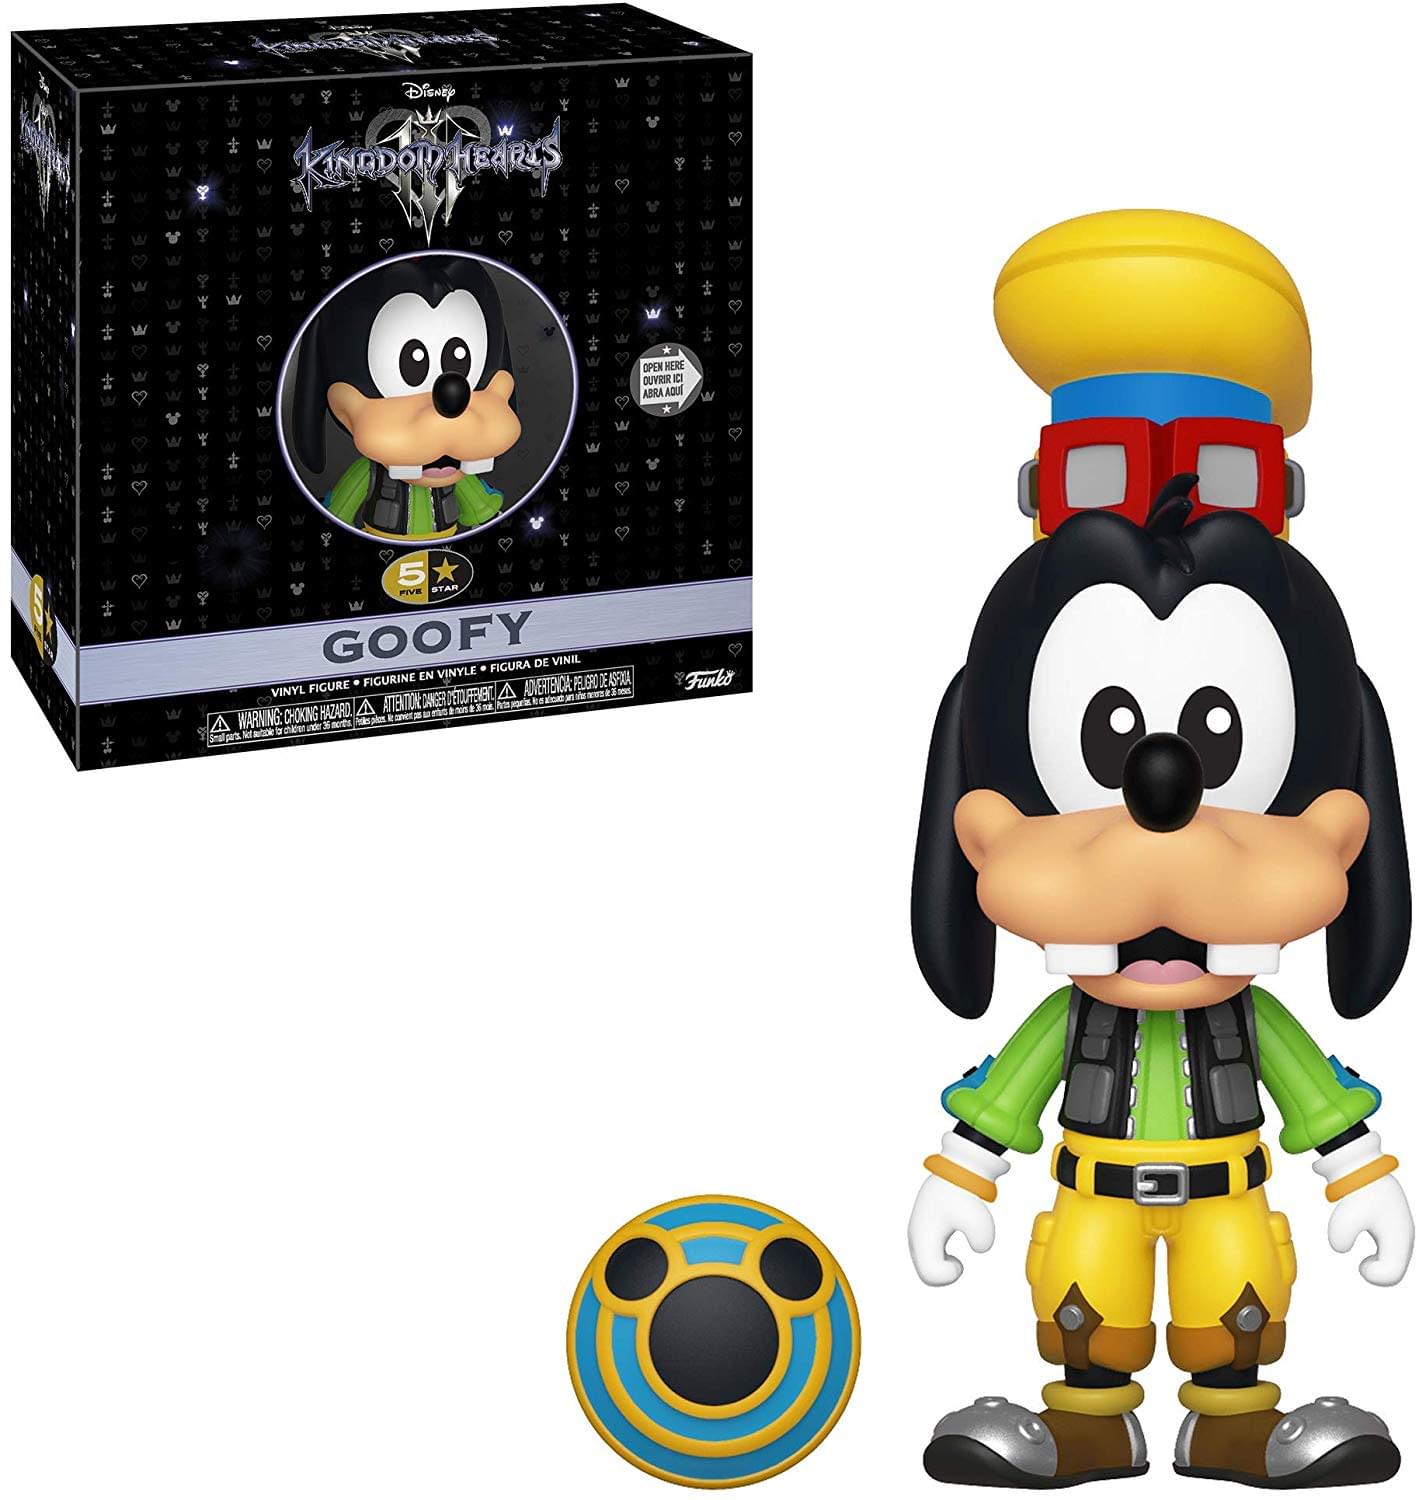 Kingdom Hearts 3 Funko 5 Star Vinyl Figure | Goofy